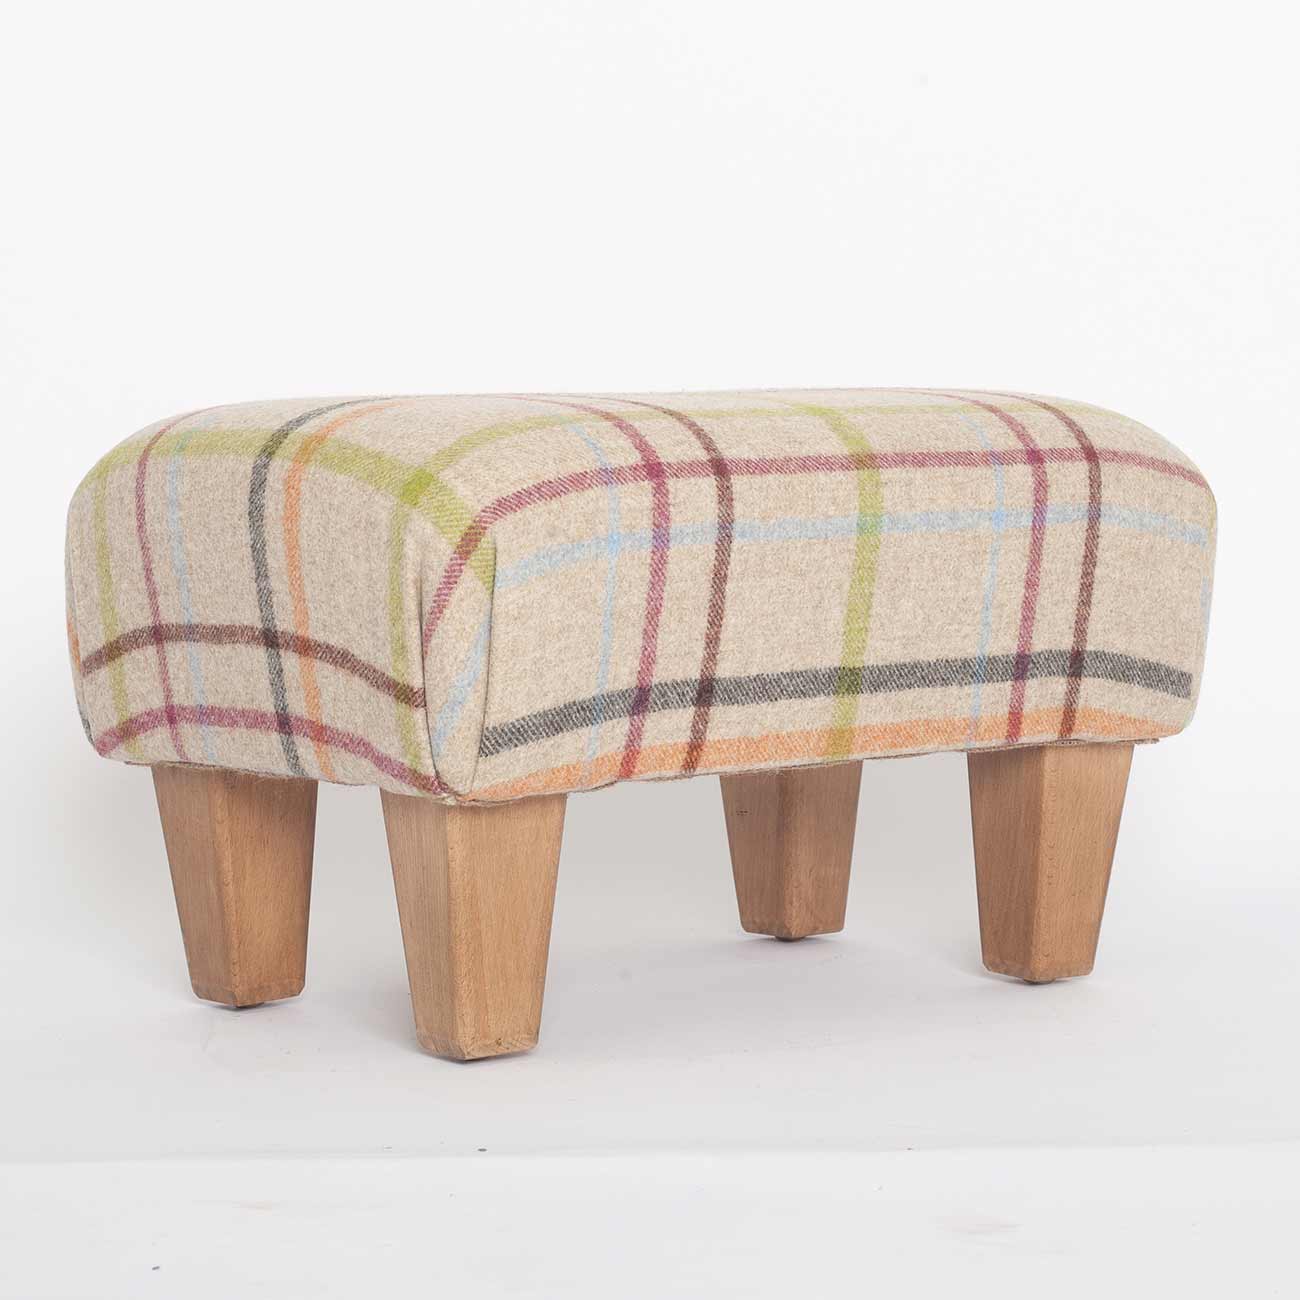 stripey-pattern-footstool10 fabric from JLP